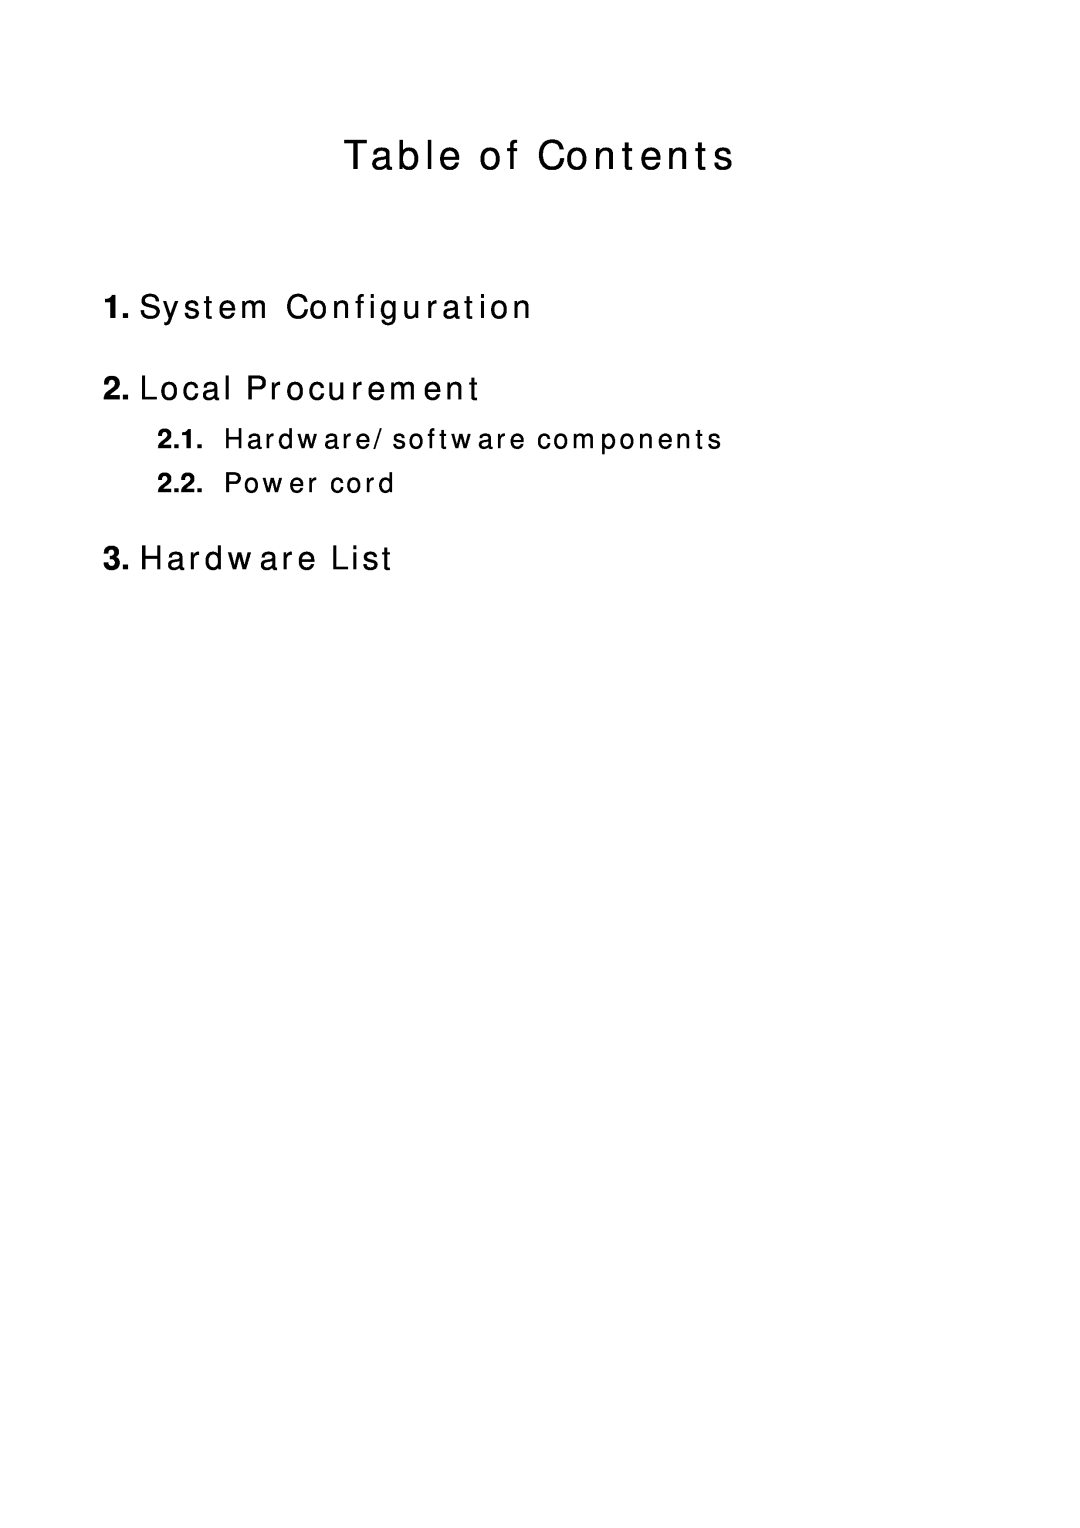 NEC R320A-E4 manual System Configuration 2. Local Procurement, Hardware List, Table of Contents 